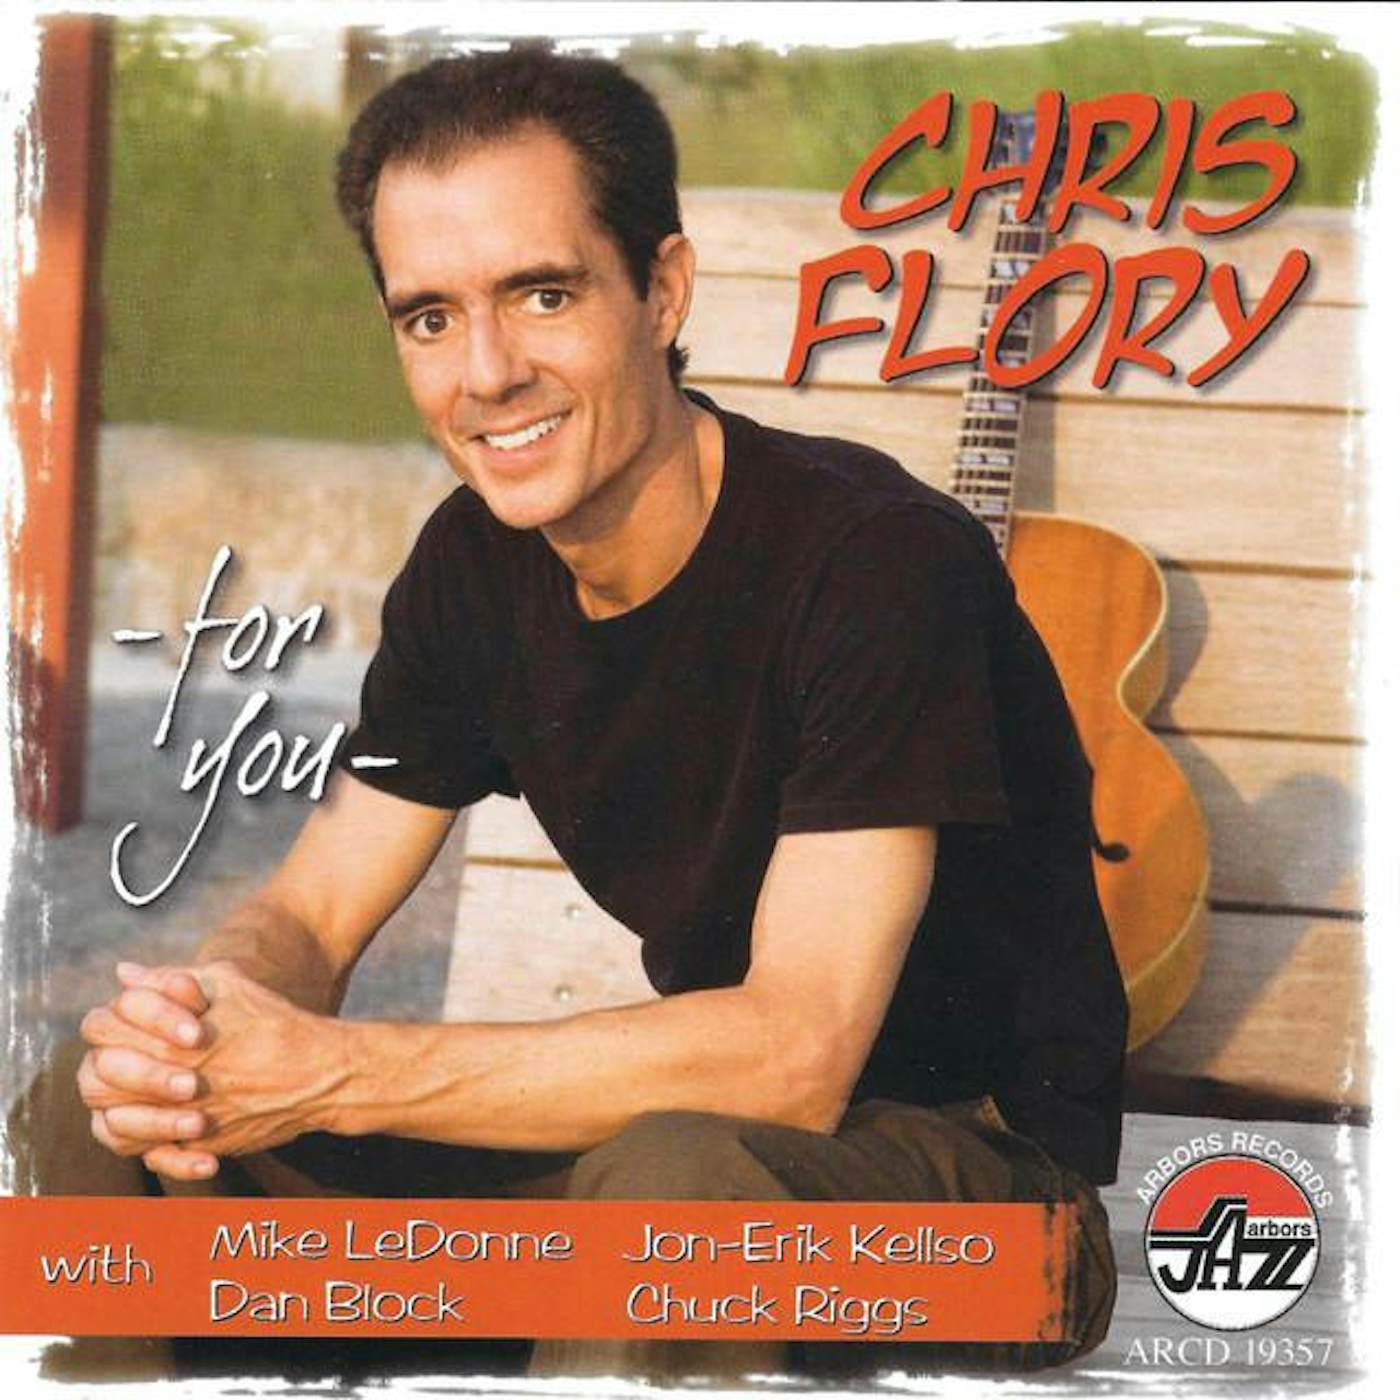 Chris Flory